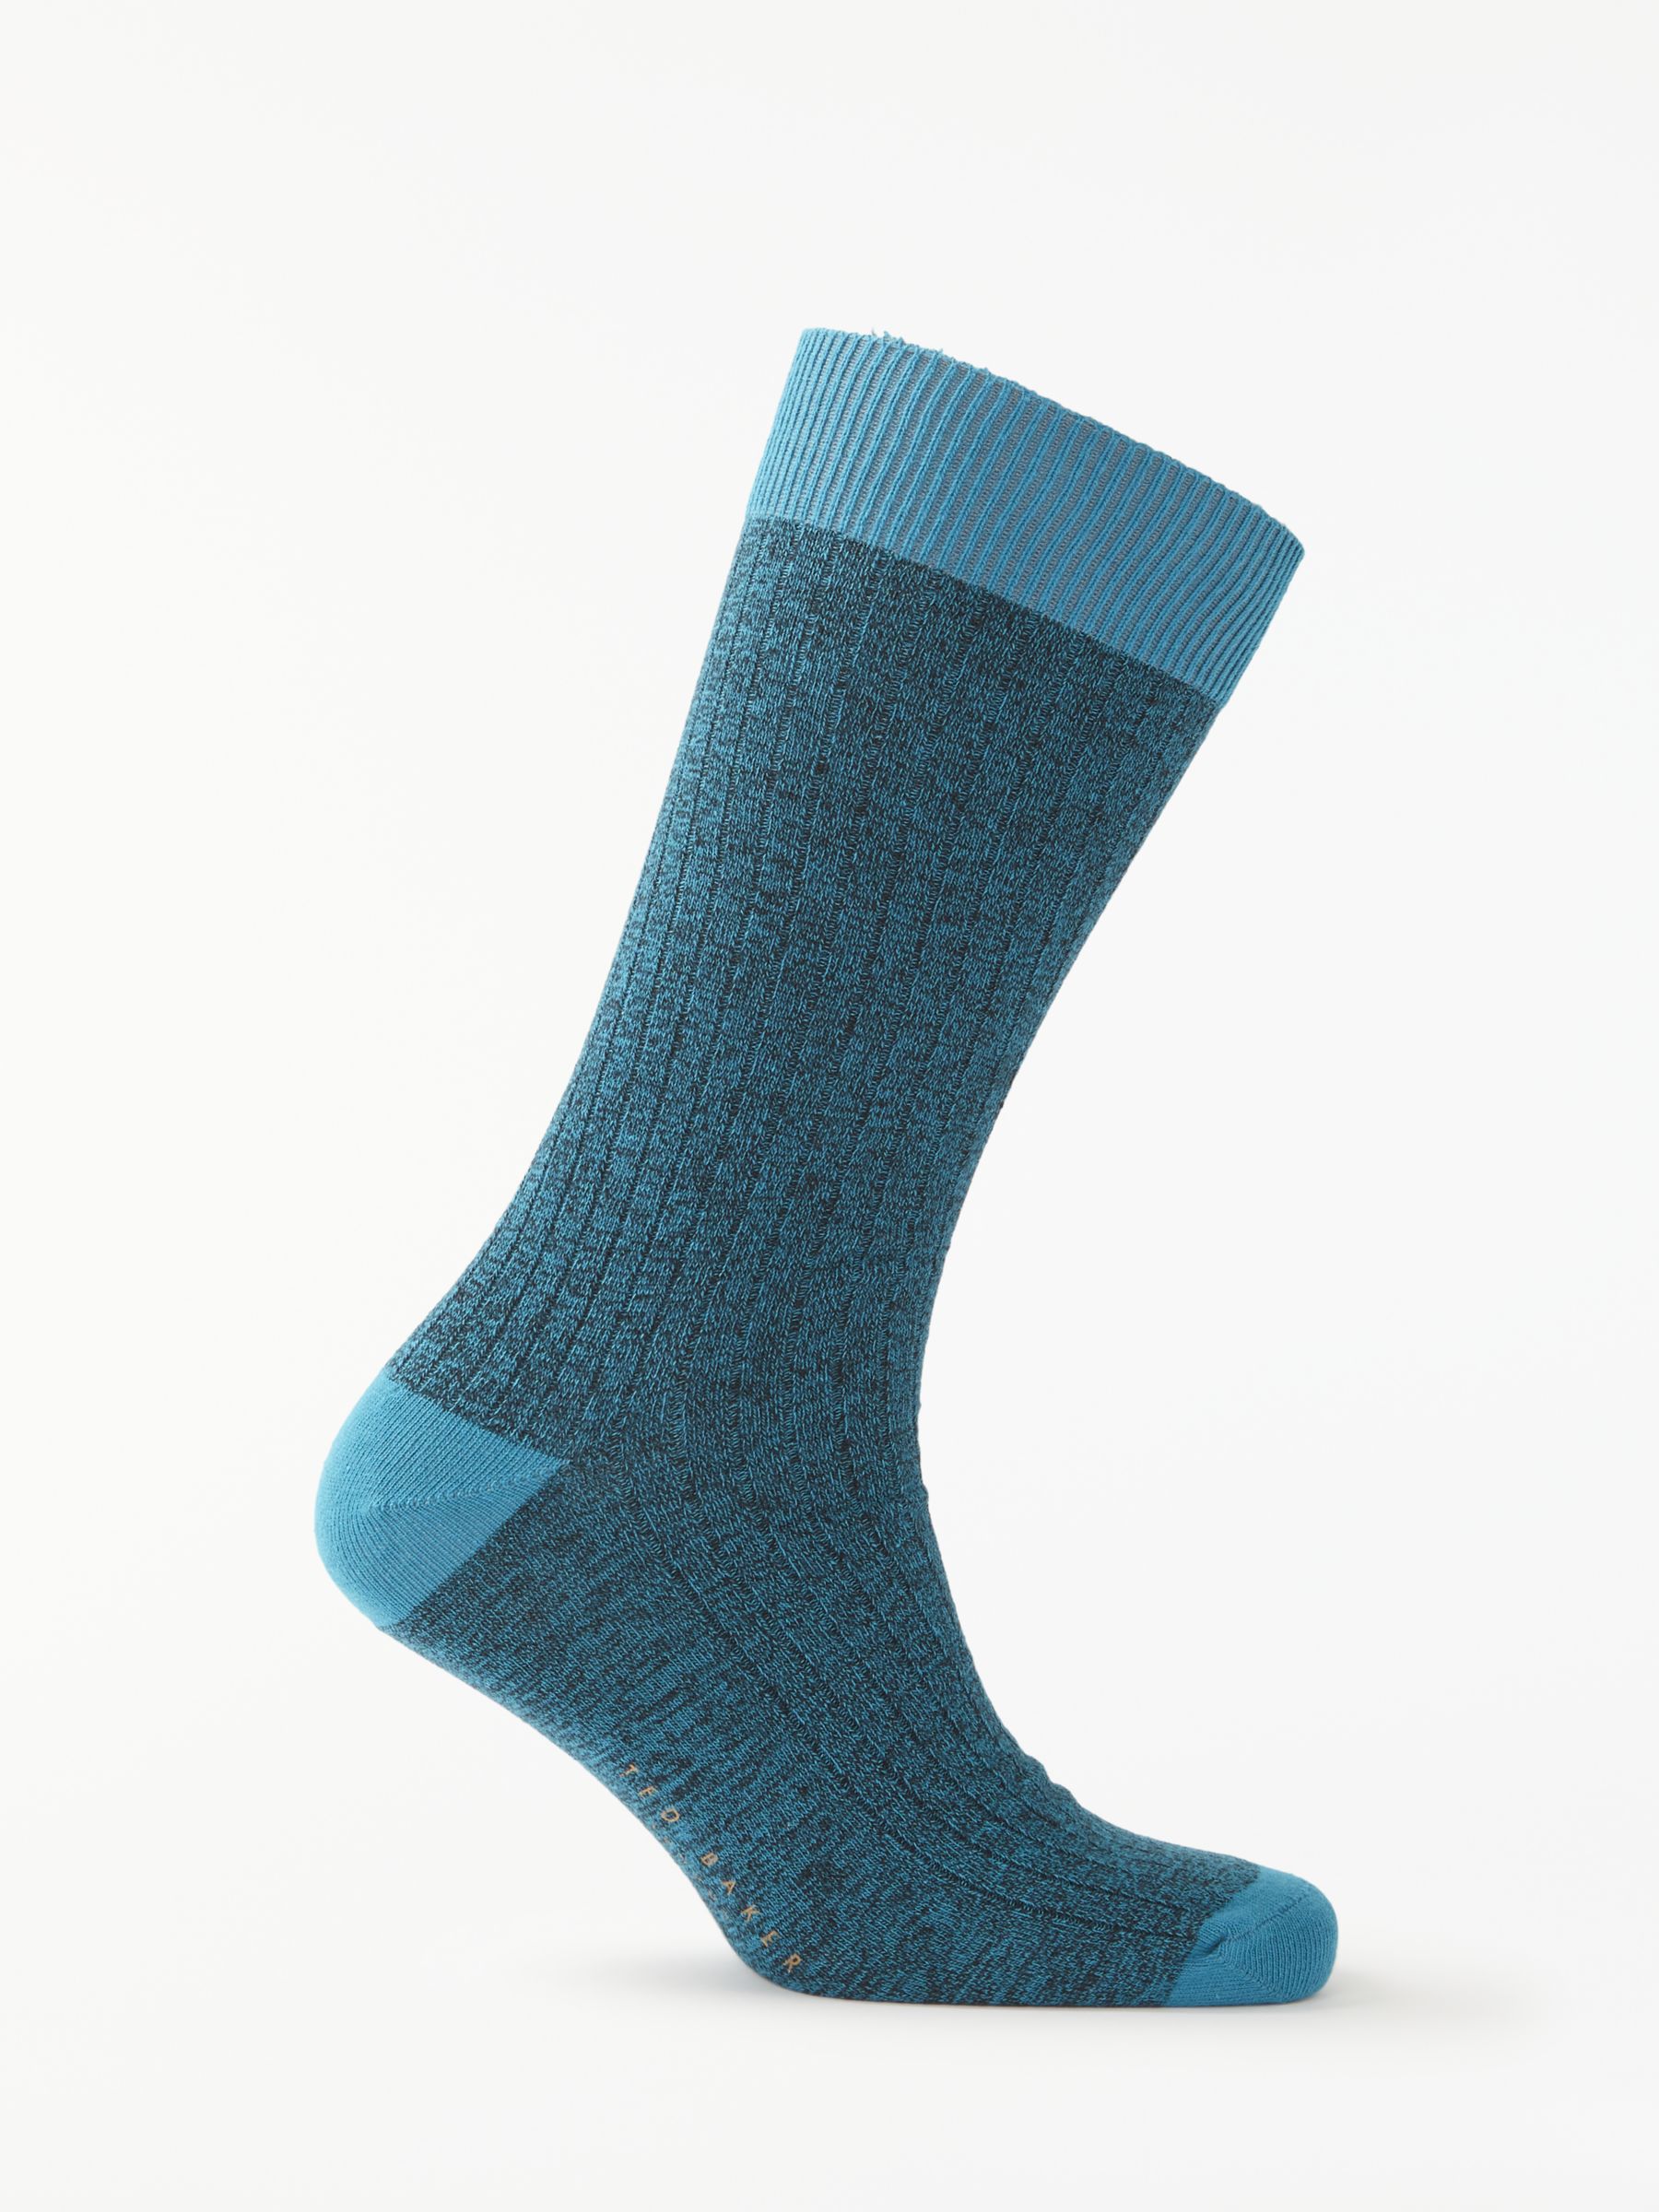 Ted Baker Polbray Textured Rib Socks, One Size